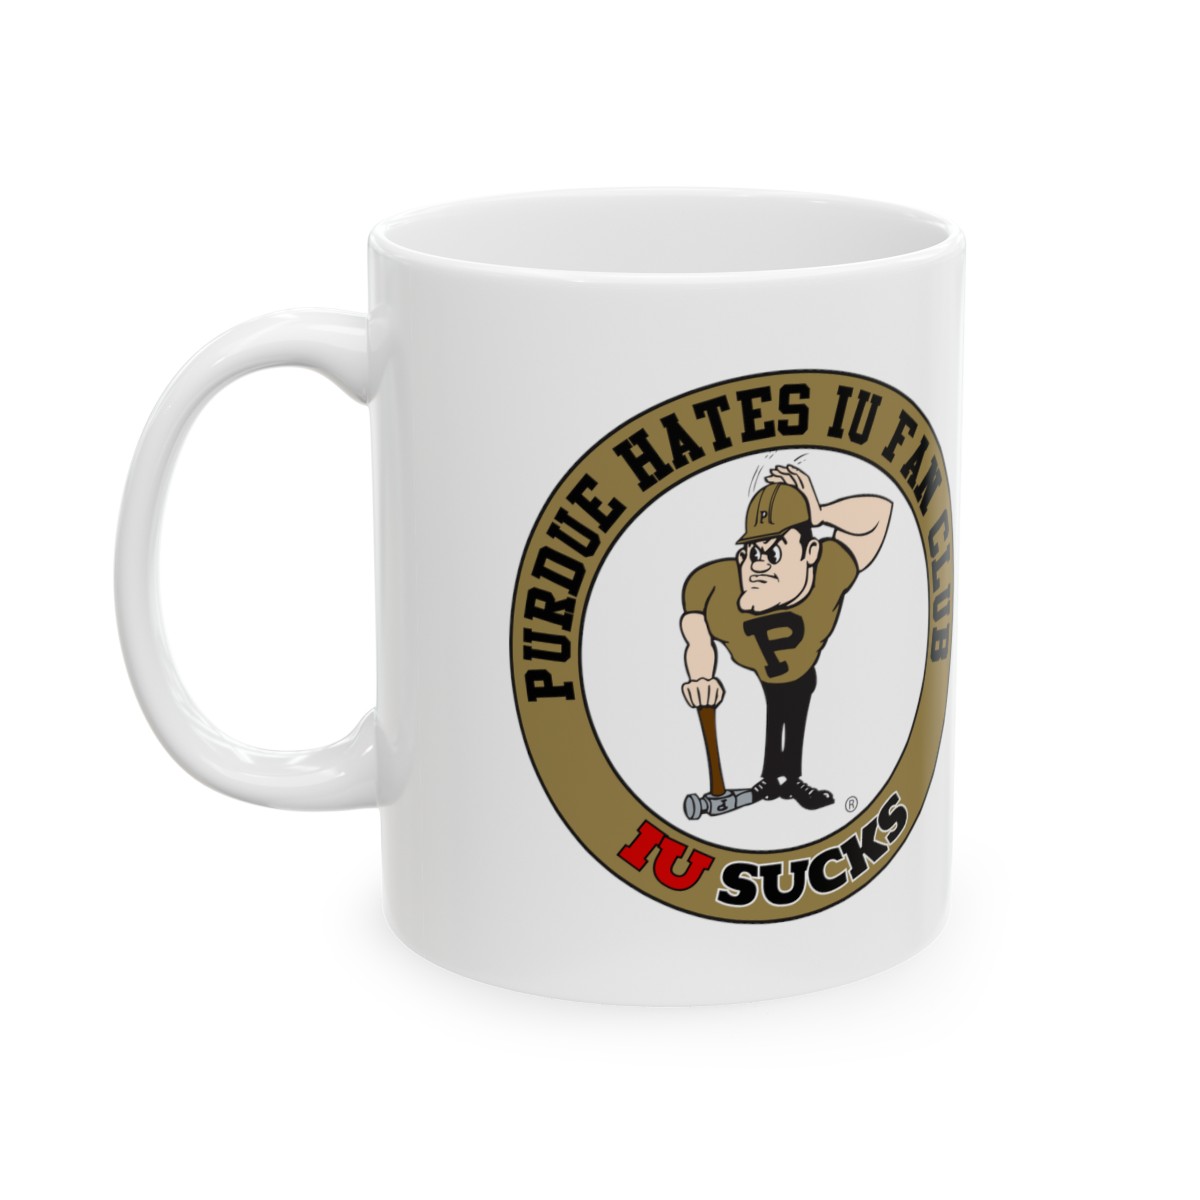 Purdue Hates IU Fan Club Ceramic Mug 11oz product thumbnail image